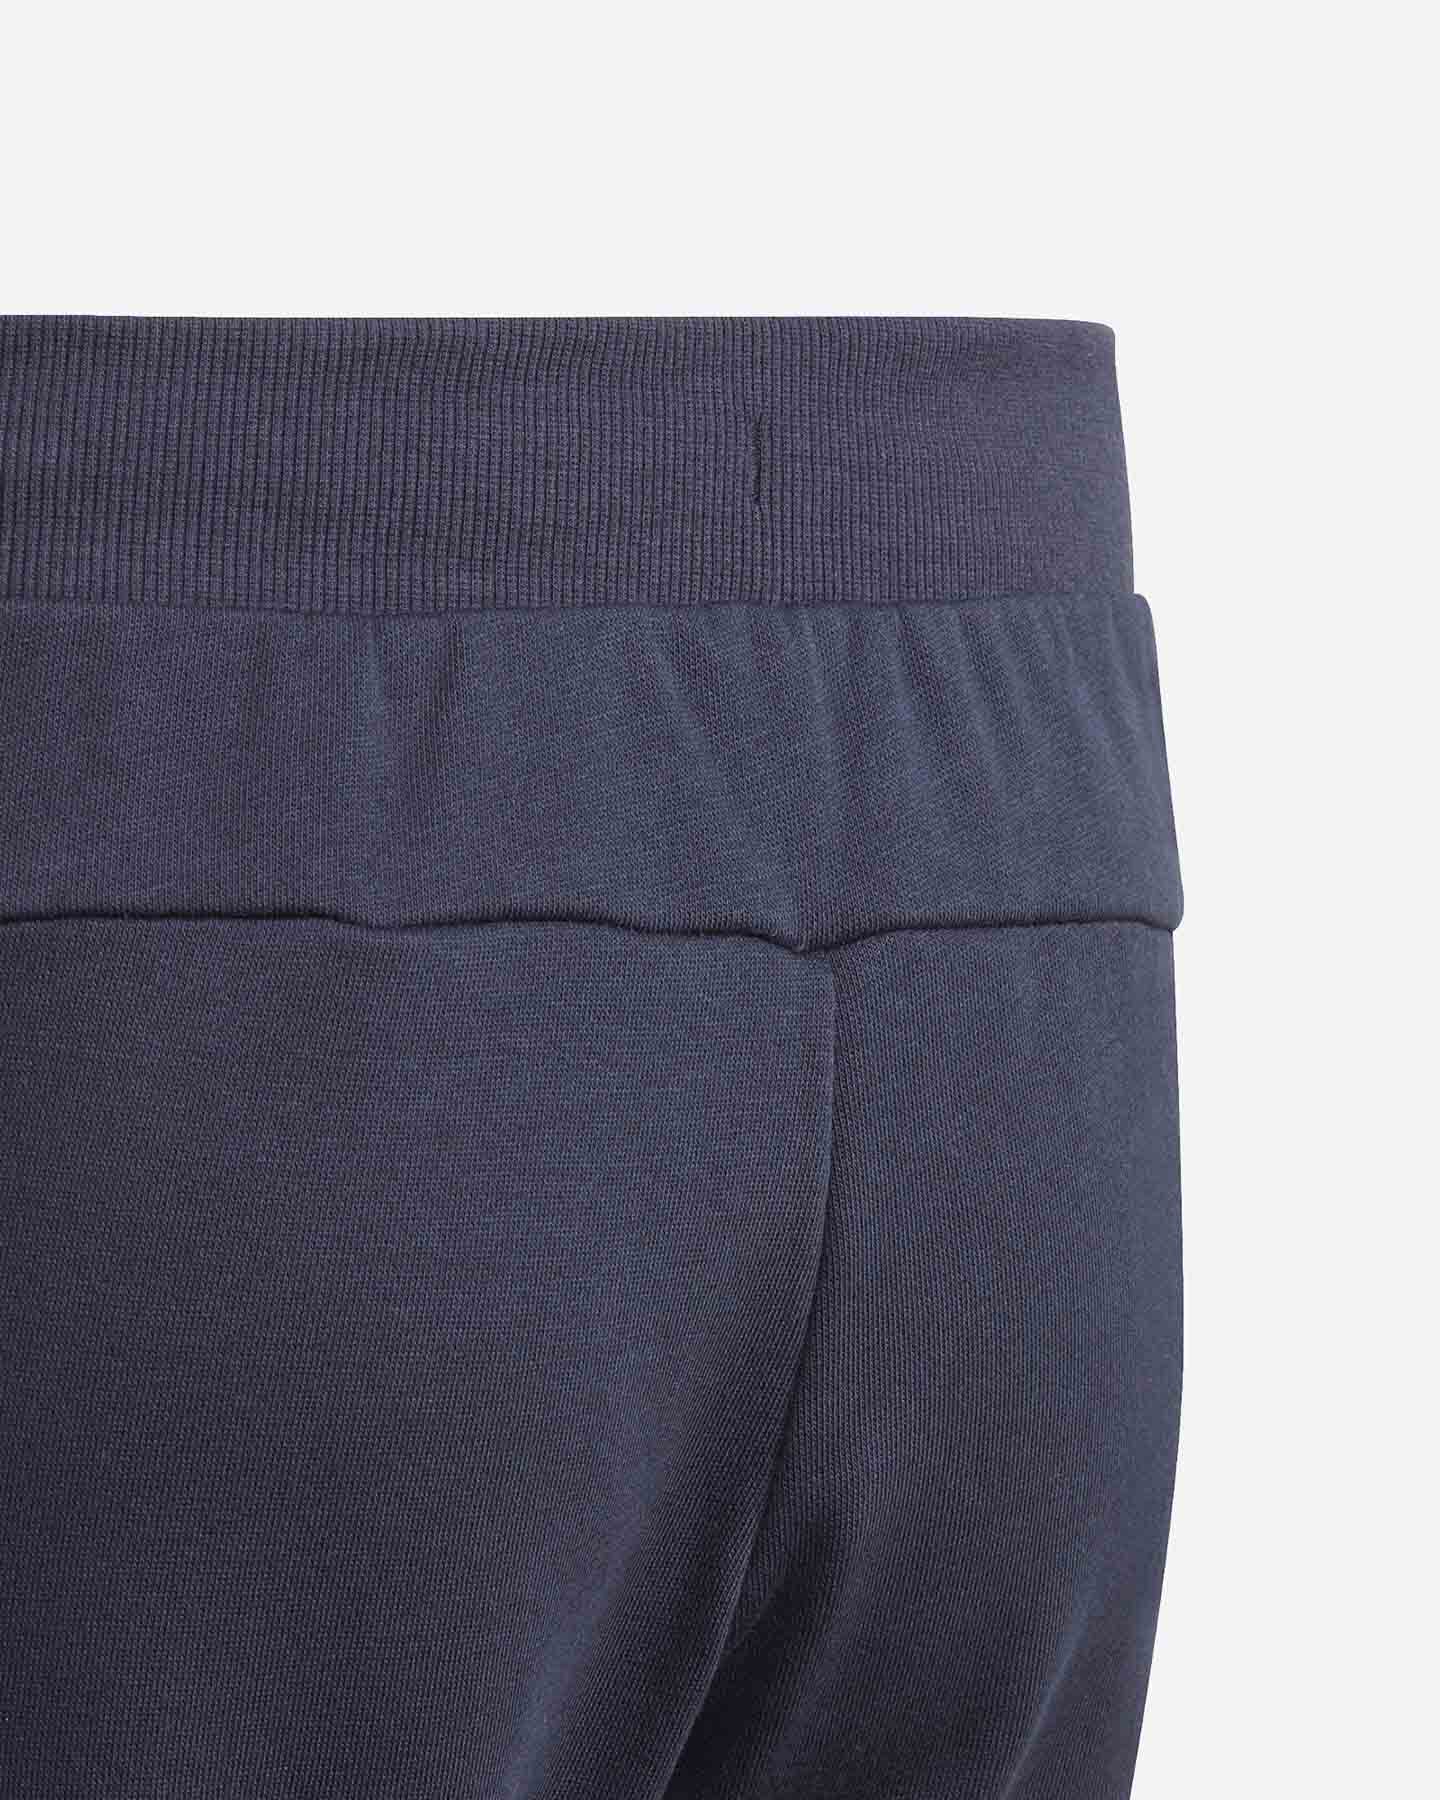  Pantalone ADIDAS 3 STRIPES JR S5276029|UNI|7-8A scatto 4